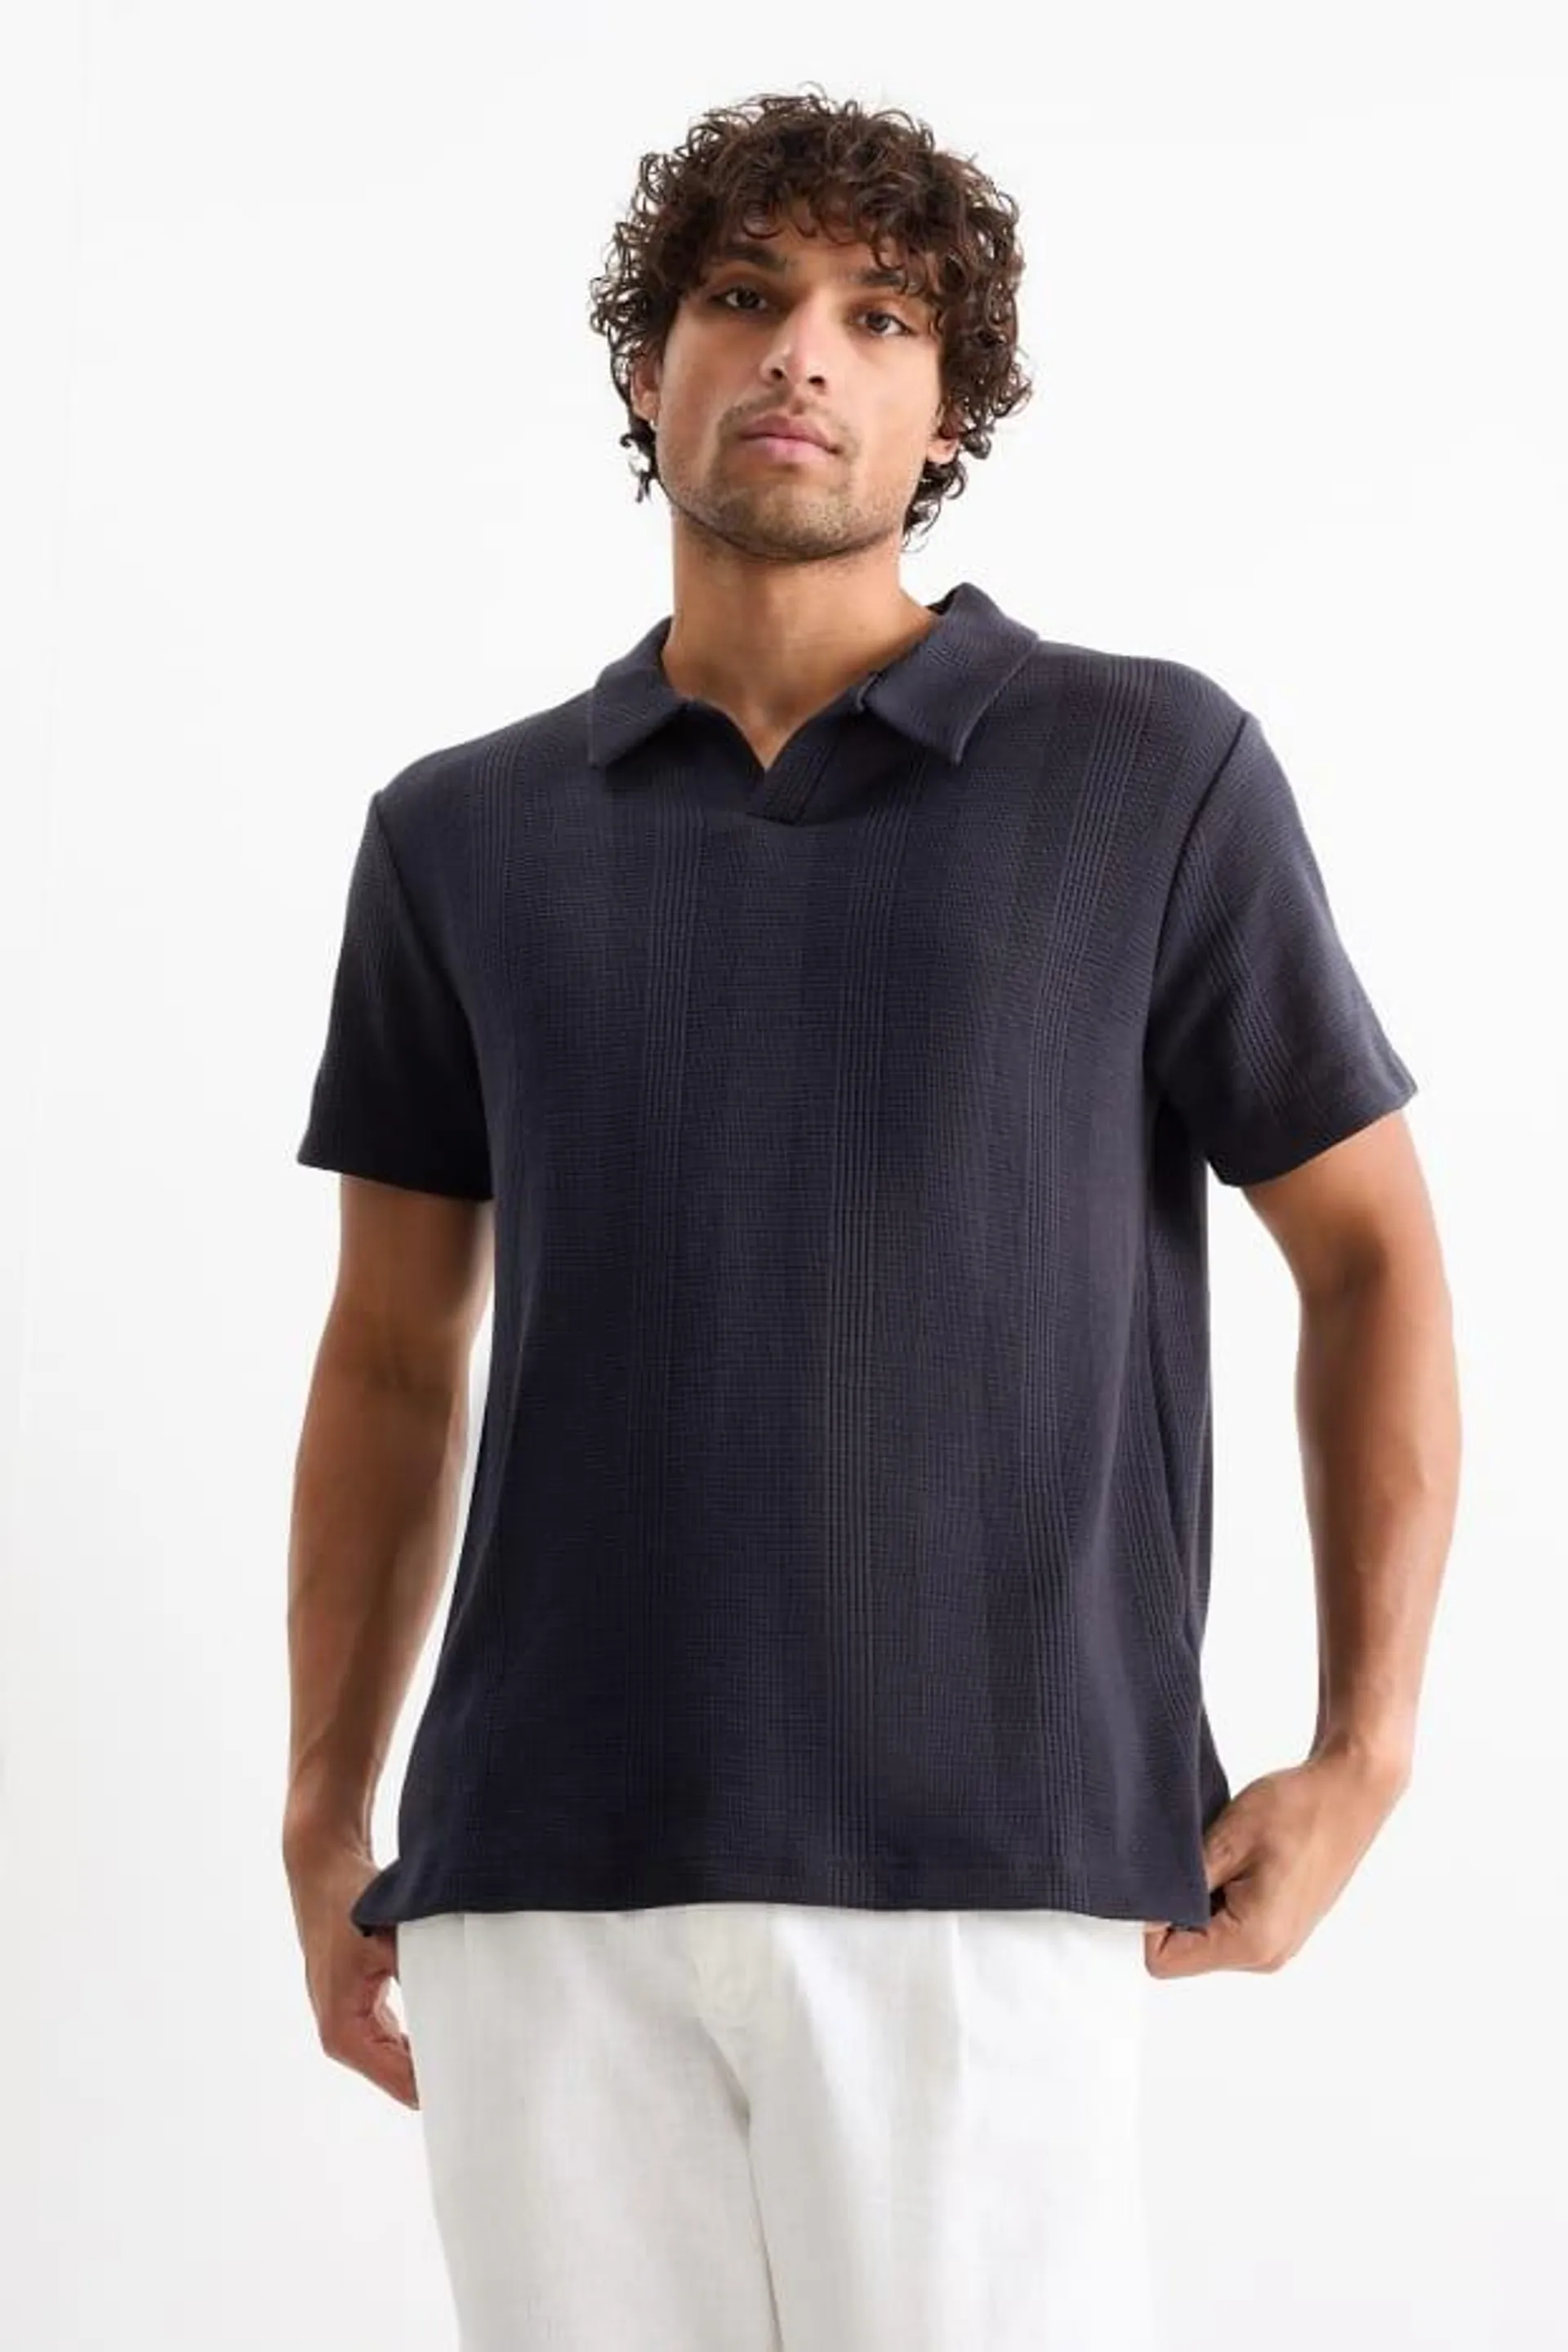 Polo shirt - textured